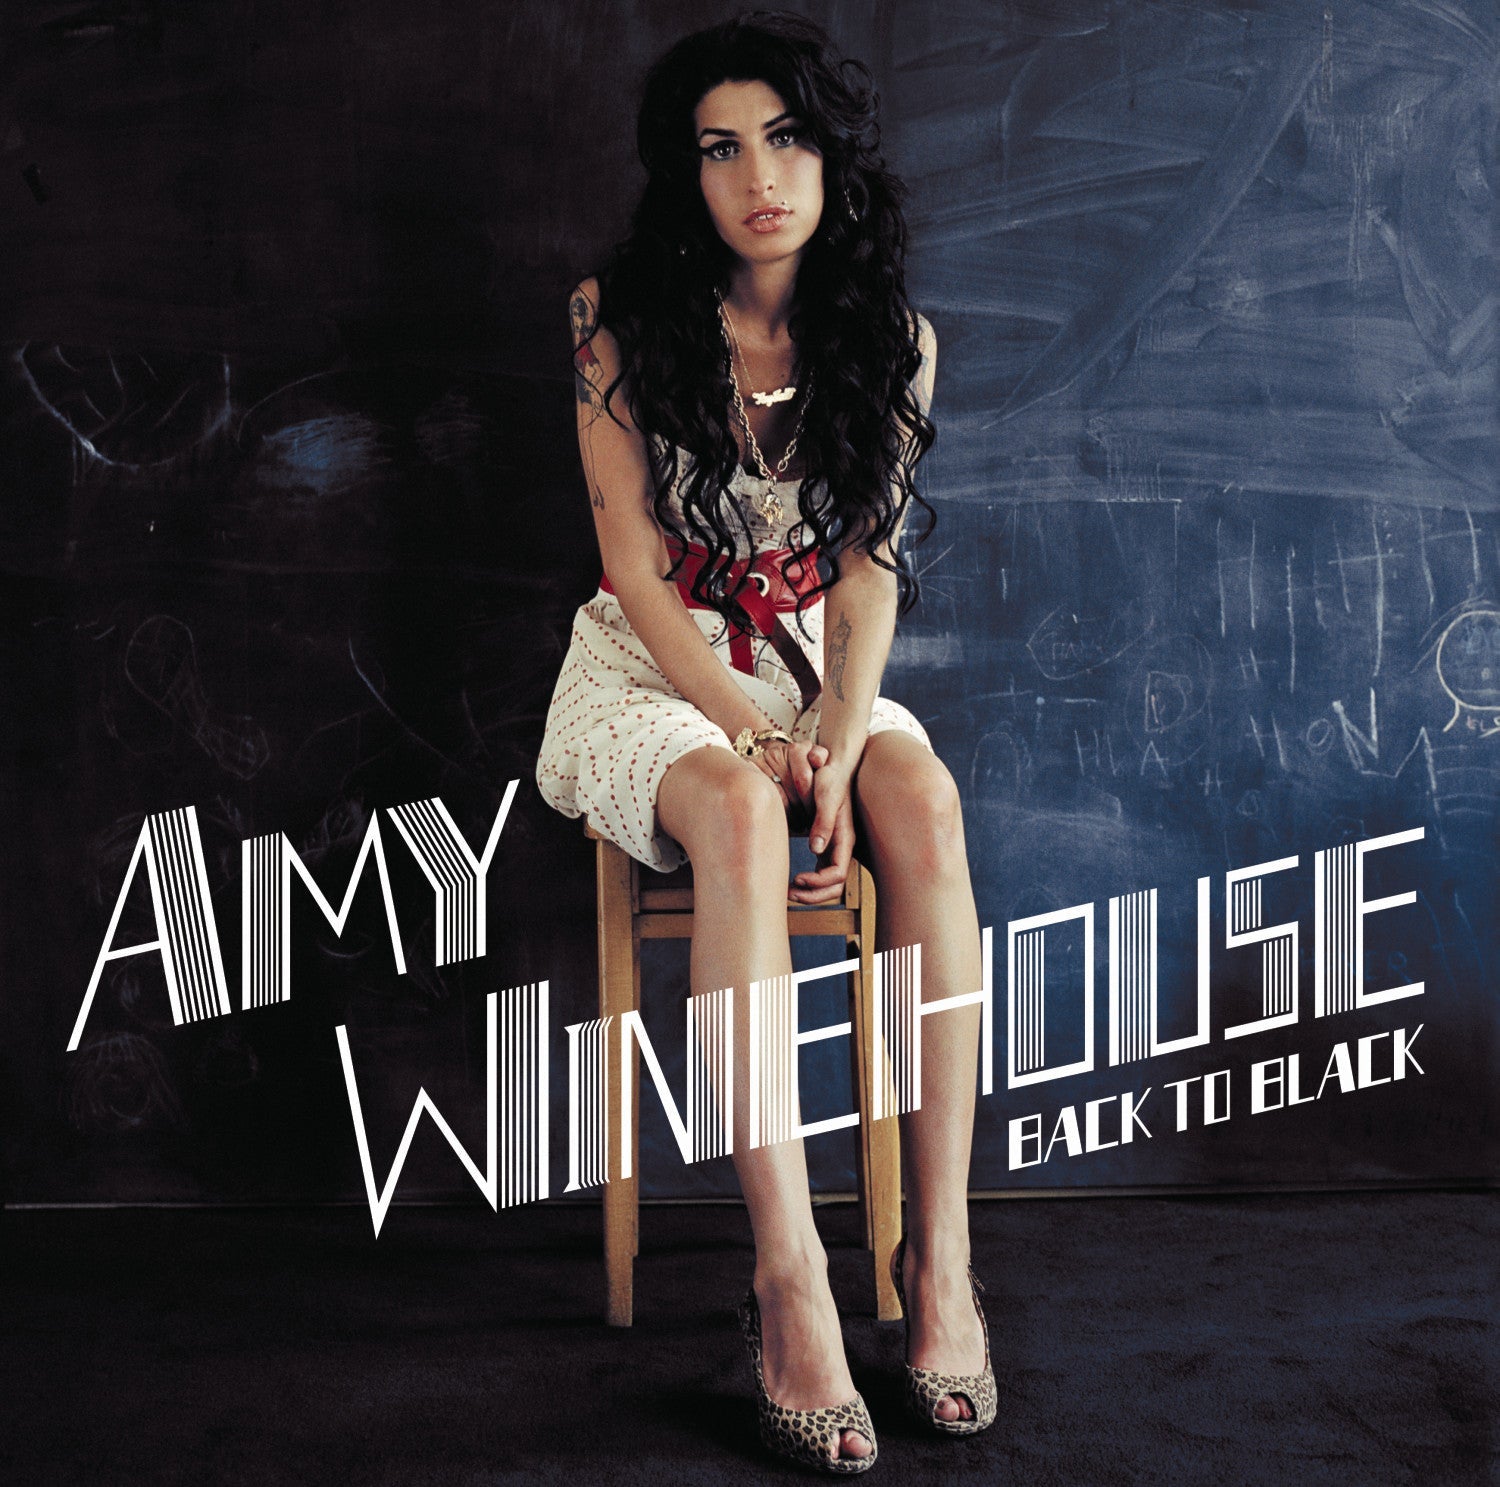 Amy Winehouse - Back to Black - Vinyle